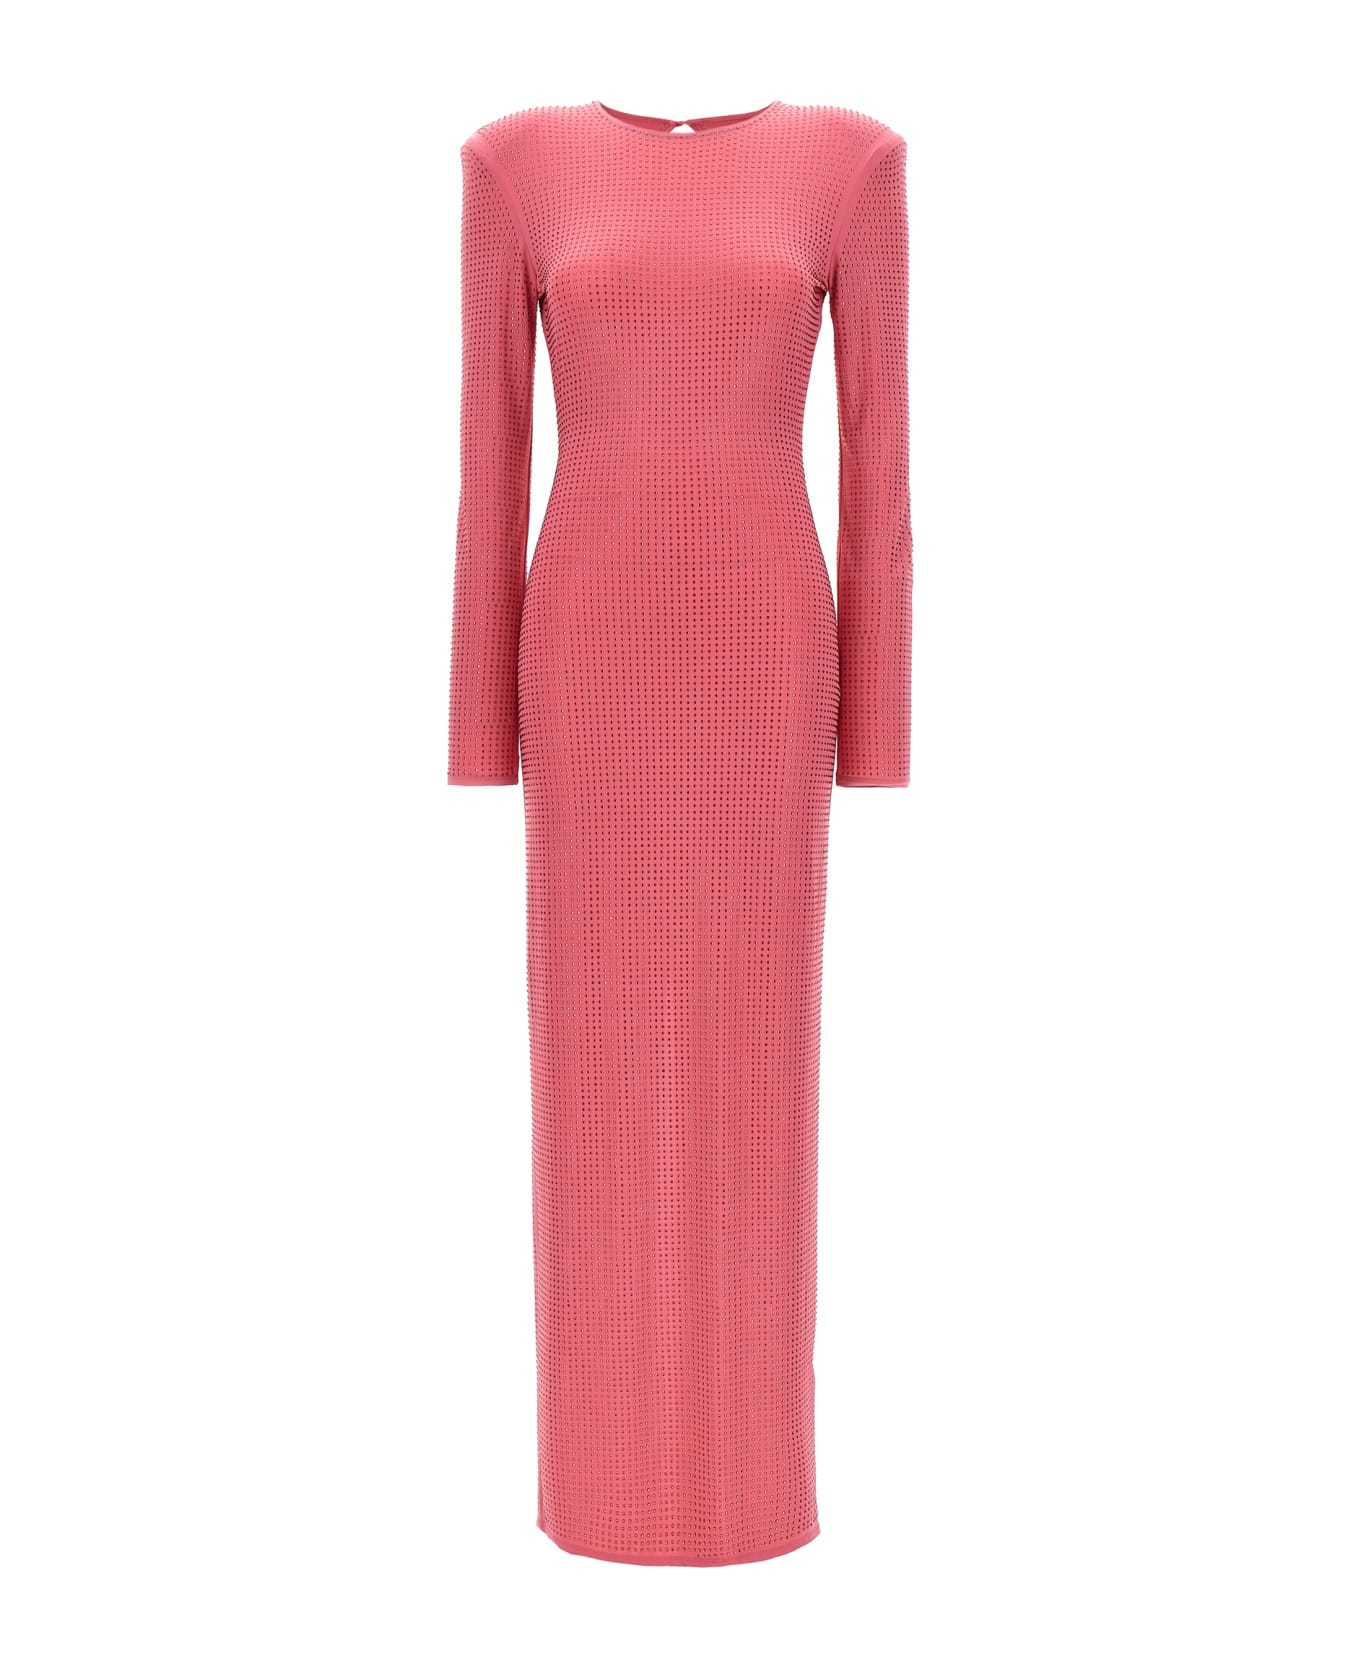 Rotate by Birger Christensen Long Rhinestone Dress - Pink